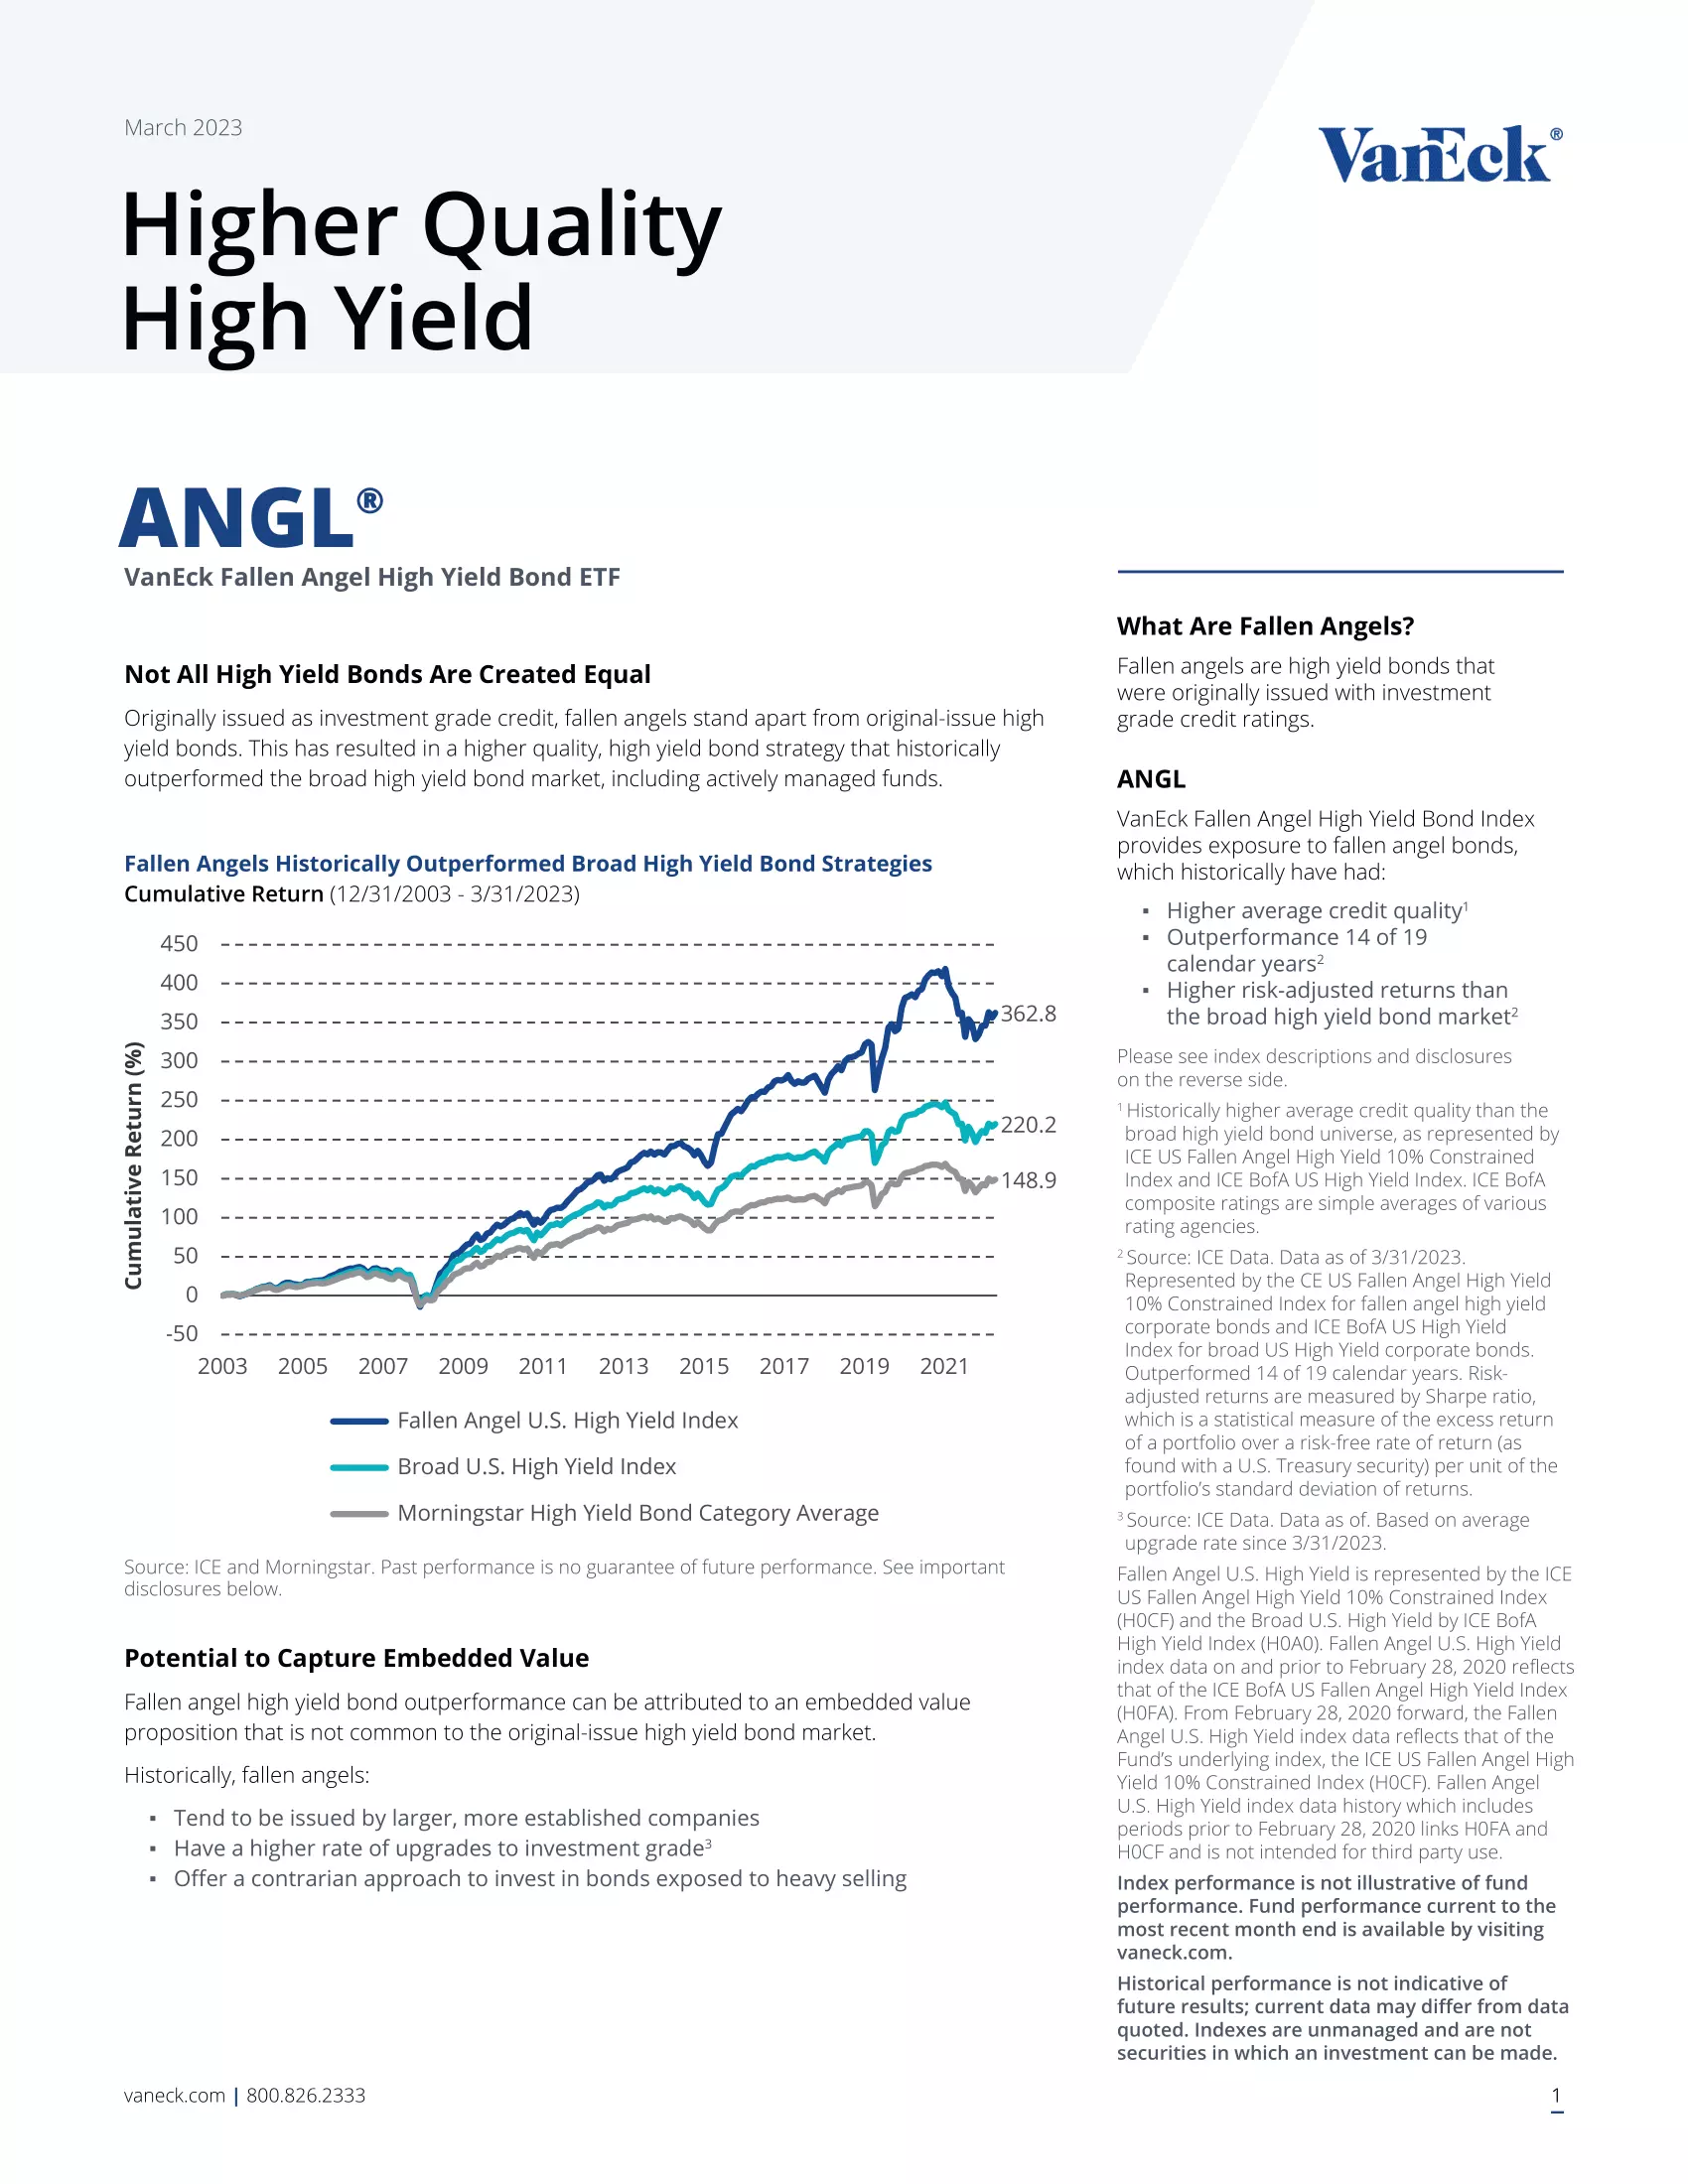 ANGL: VanEck Fallen Angel High Yield Bond ETF